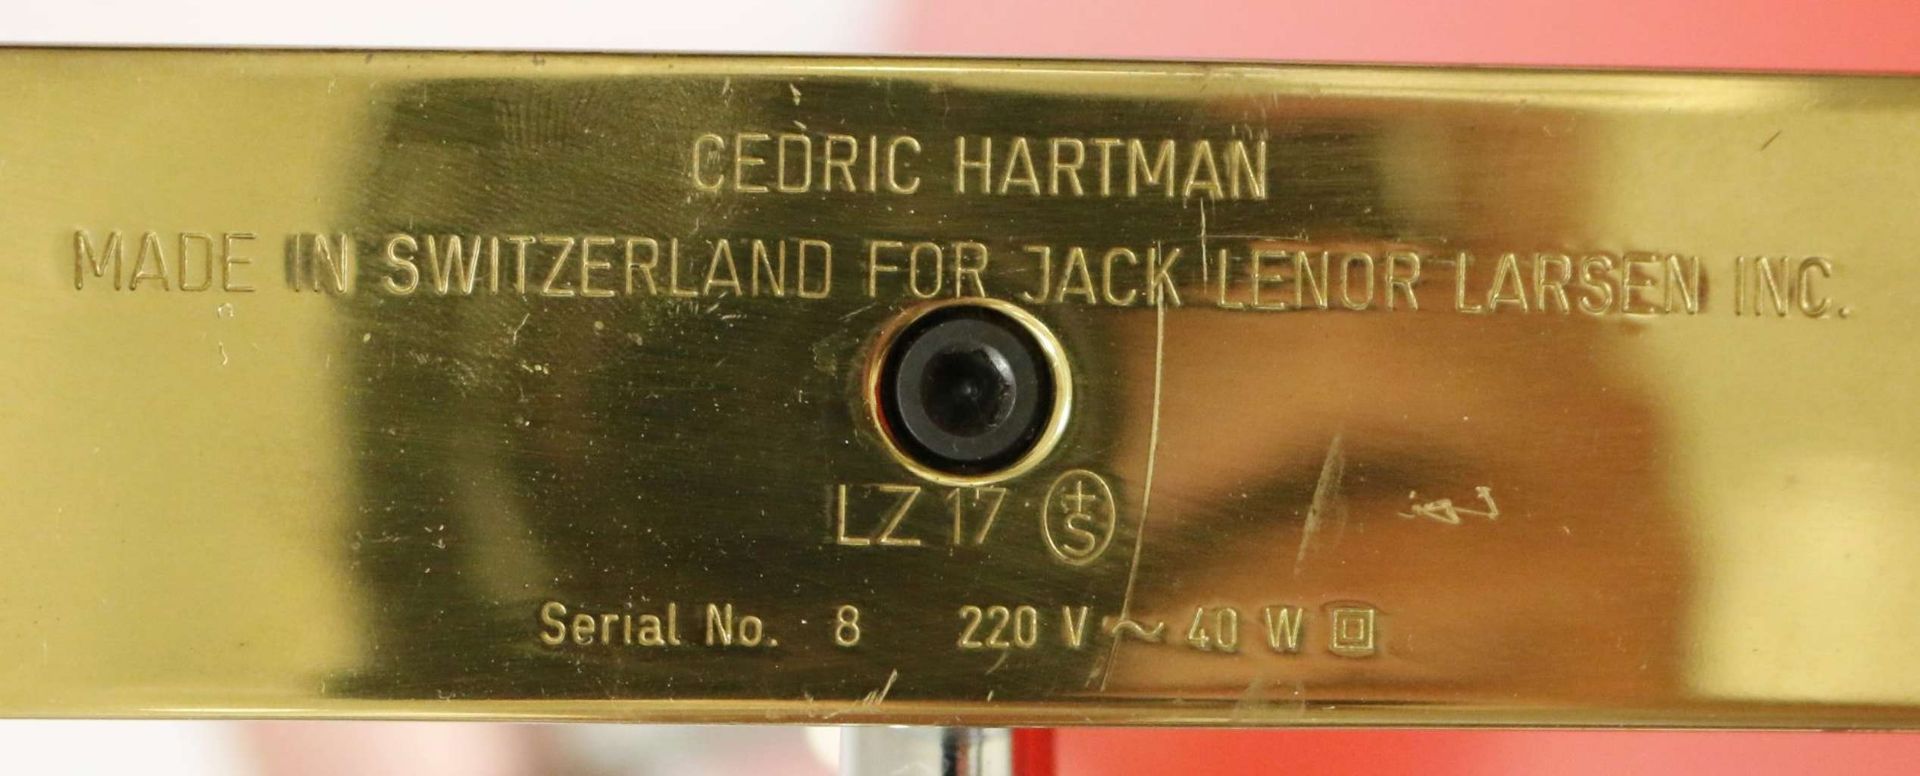 Cedric HARTMAN - Backslider - Image 6 of 6